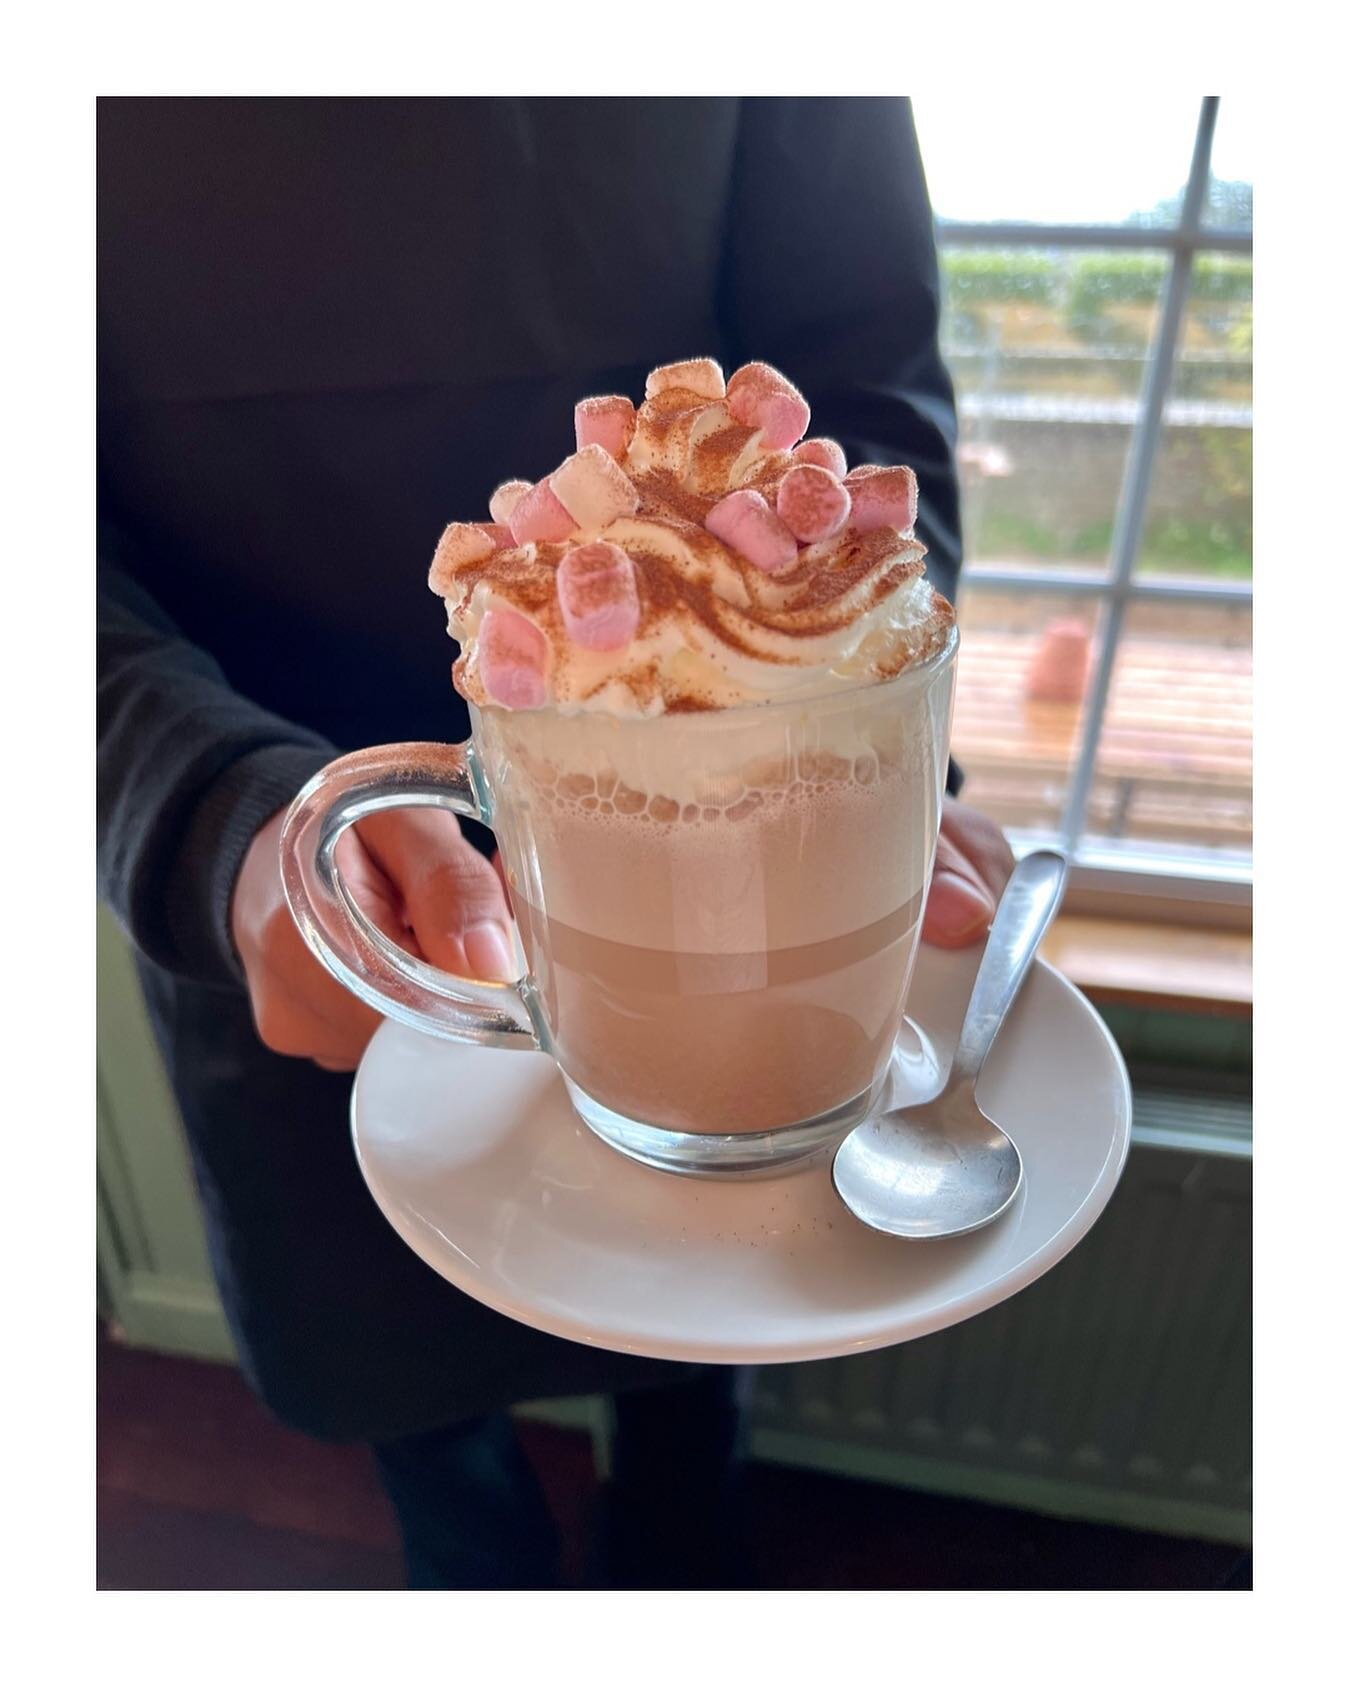 It&rsquo;s a Hot Chocolate kinda day 🍫 

#hotchocolate #creamandmarshmallows #rainydays #dykeroadpark #cafe #coffeeshop #chocolate #brighton